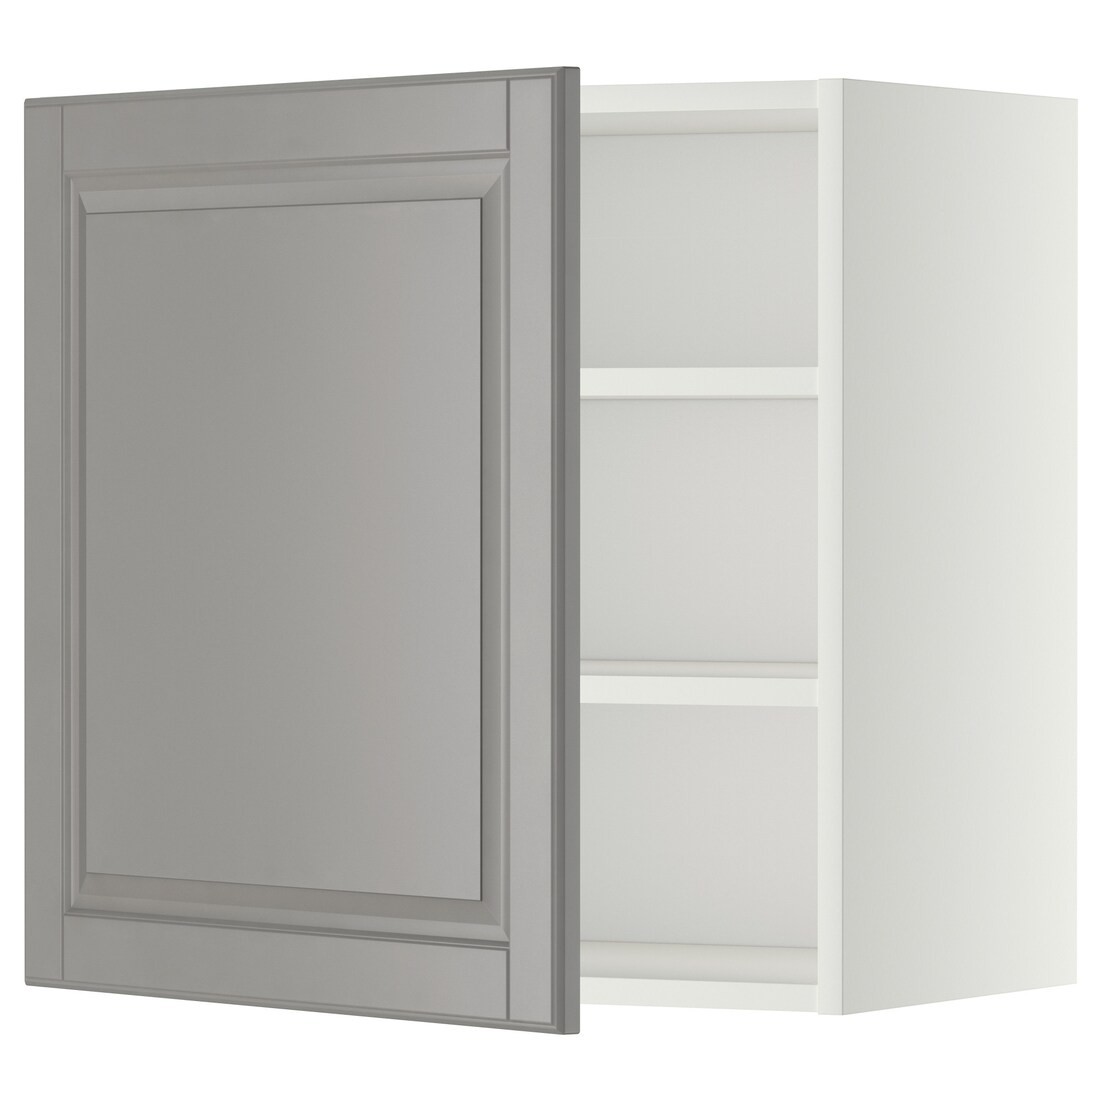 IKEA METOD МЕТОД Шкаф навесной с полками, белый / Bodbyn серый, 60x60 см 39456956 | 394.569.56